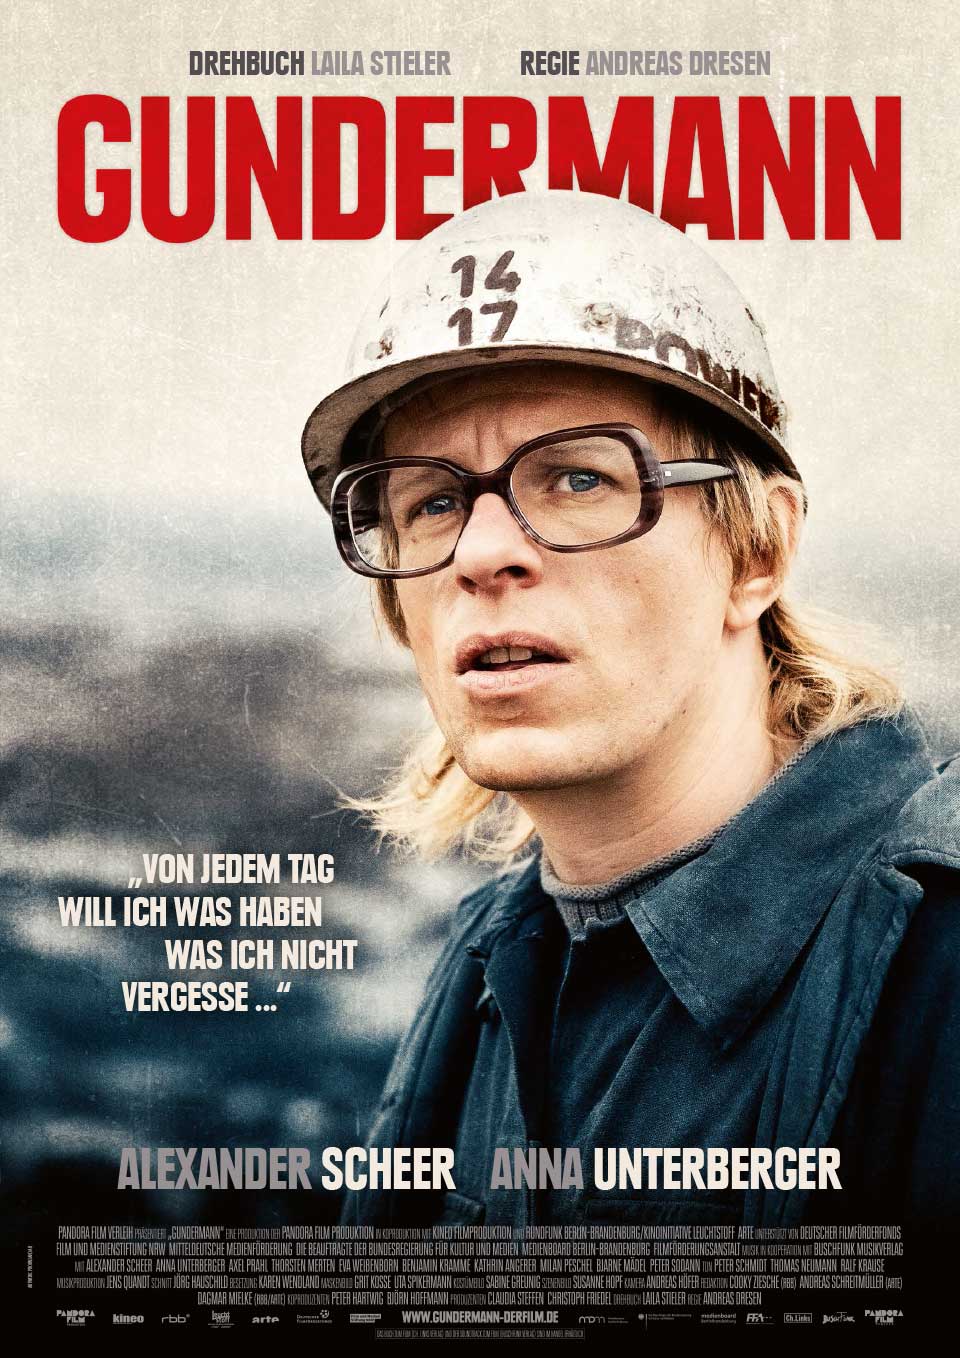 (c) Gundermann-derfilm.de